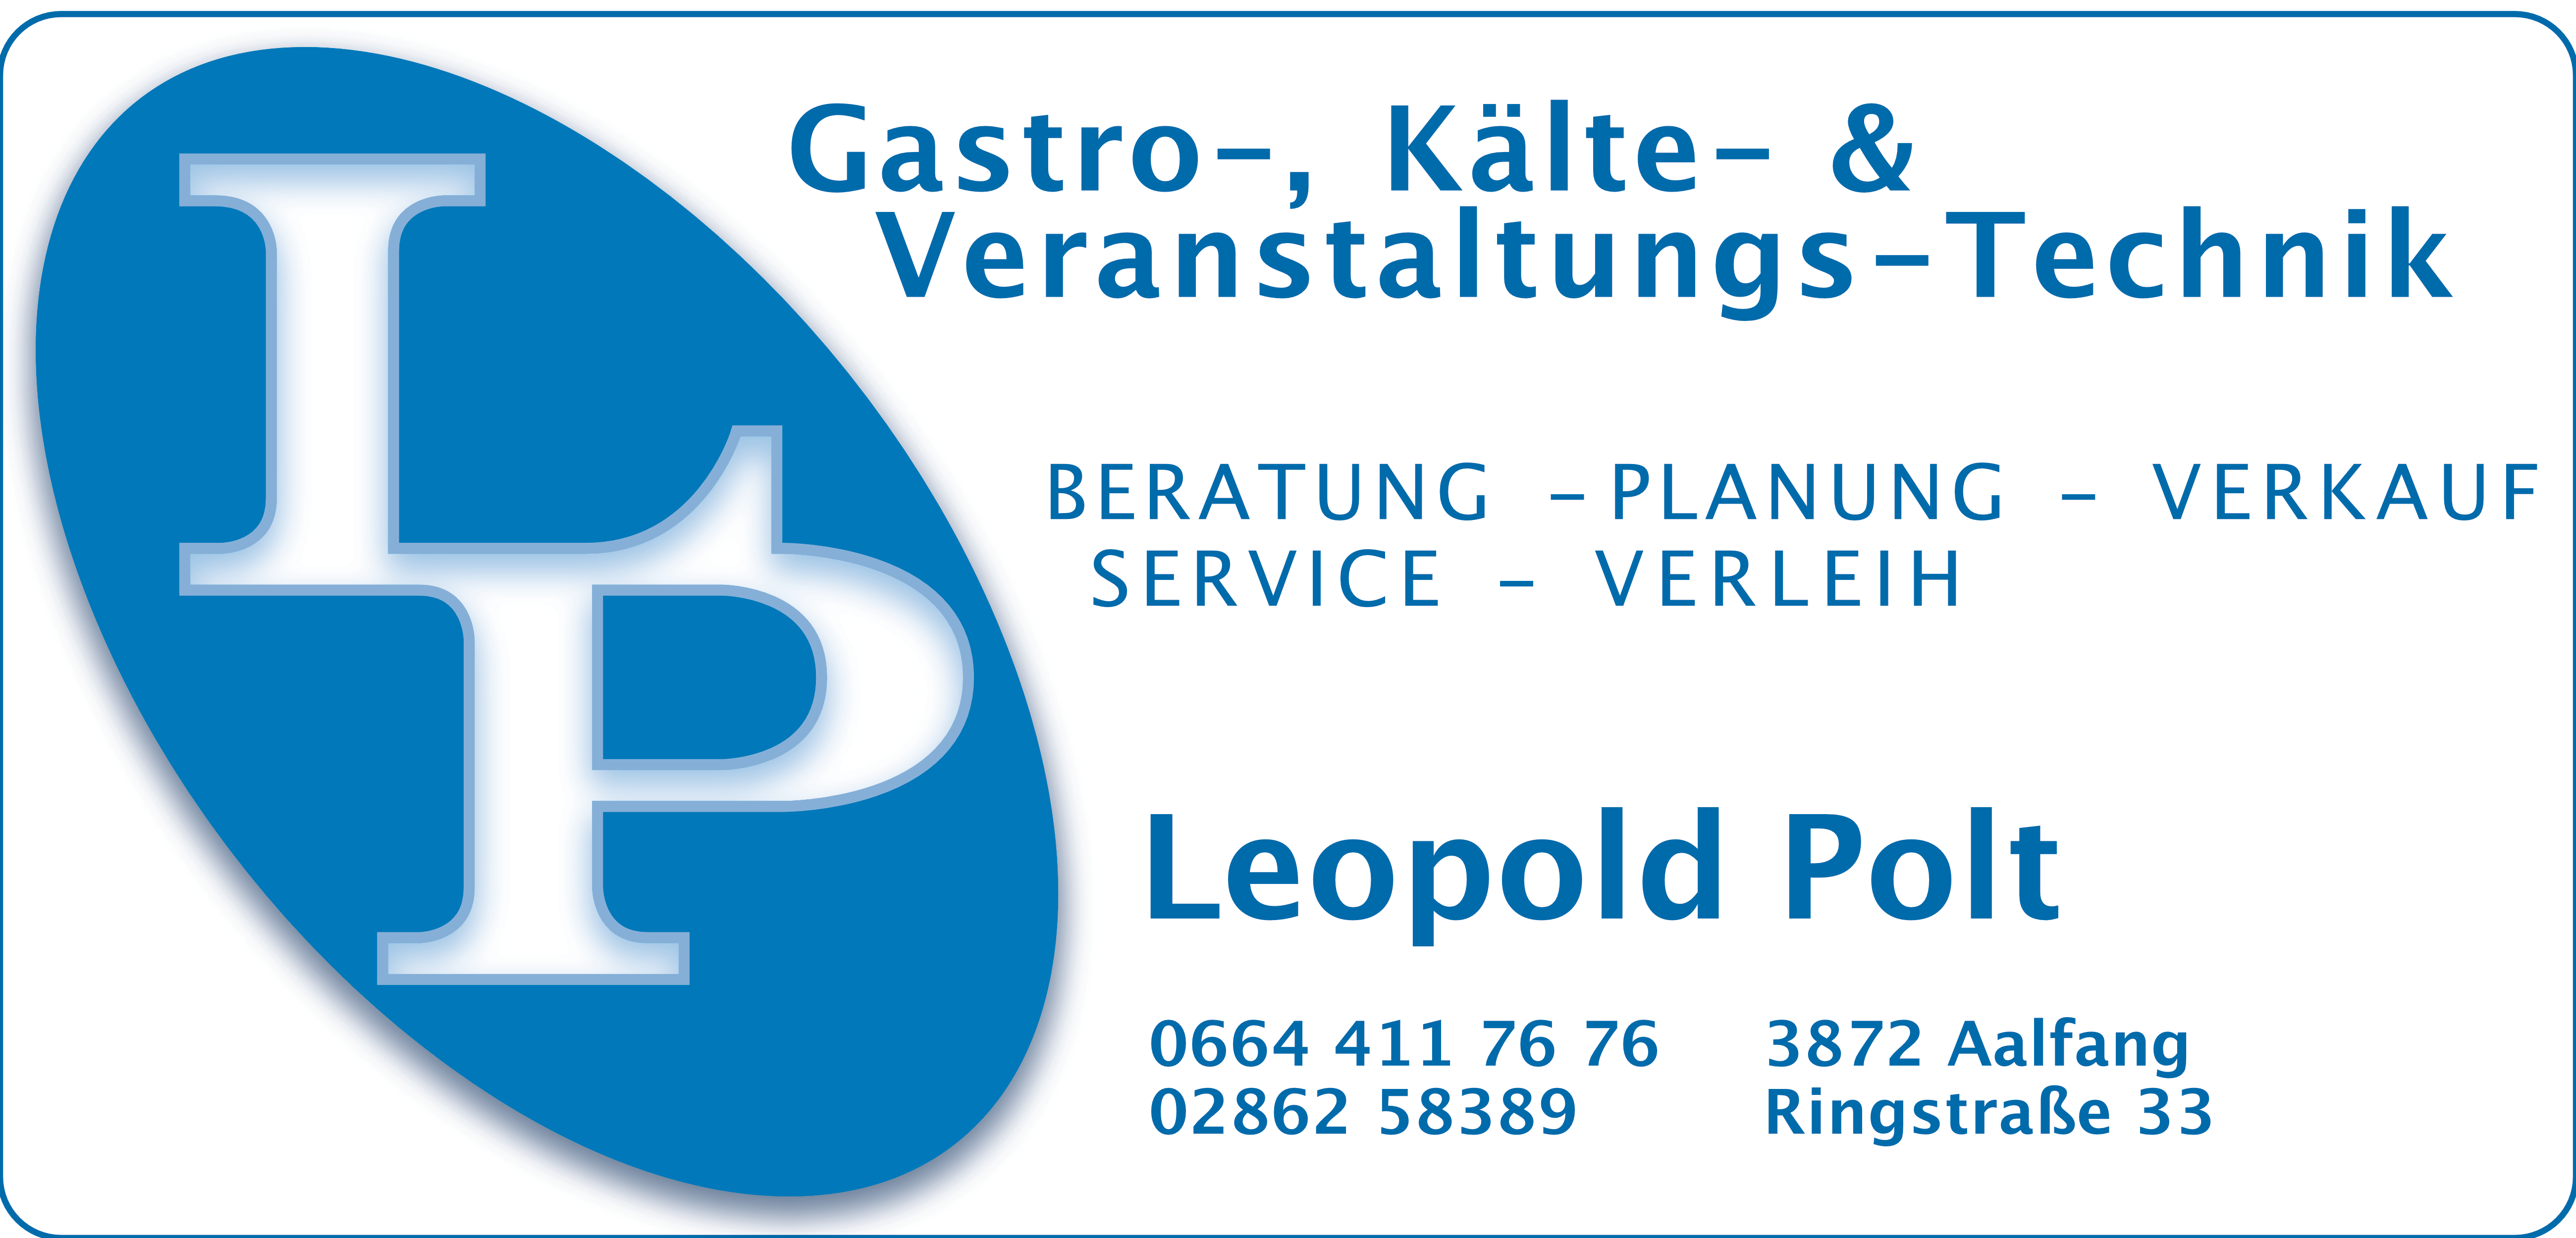 Leopold Polt Gastro-, Kälte- & Veranstaltungs-Technik